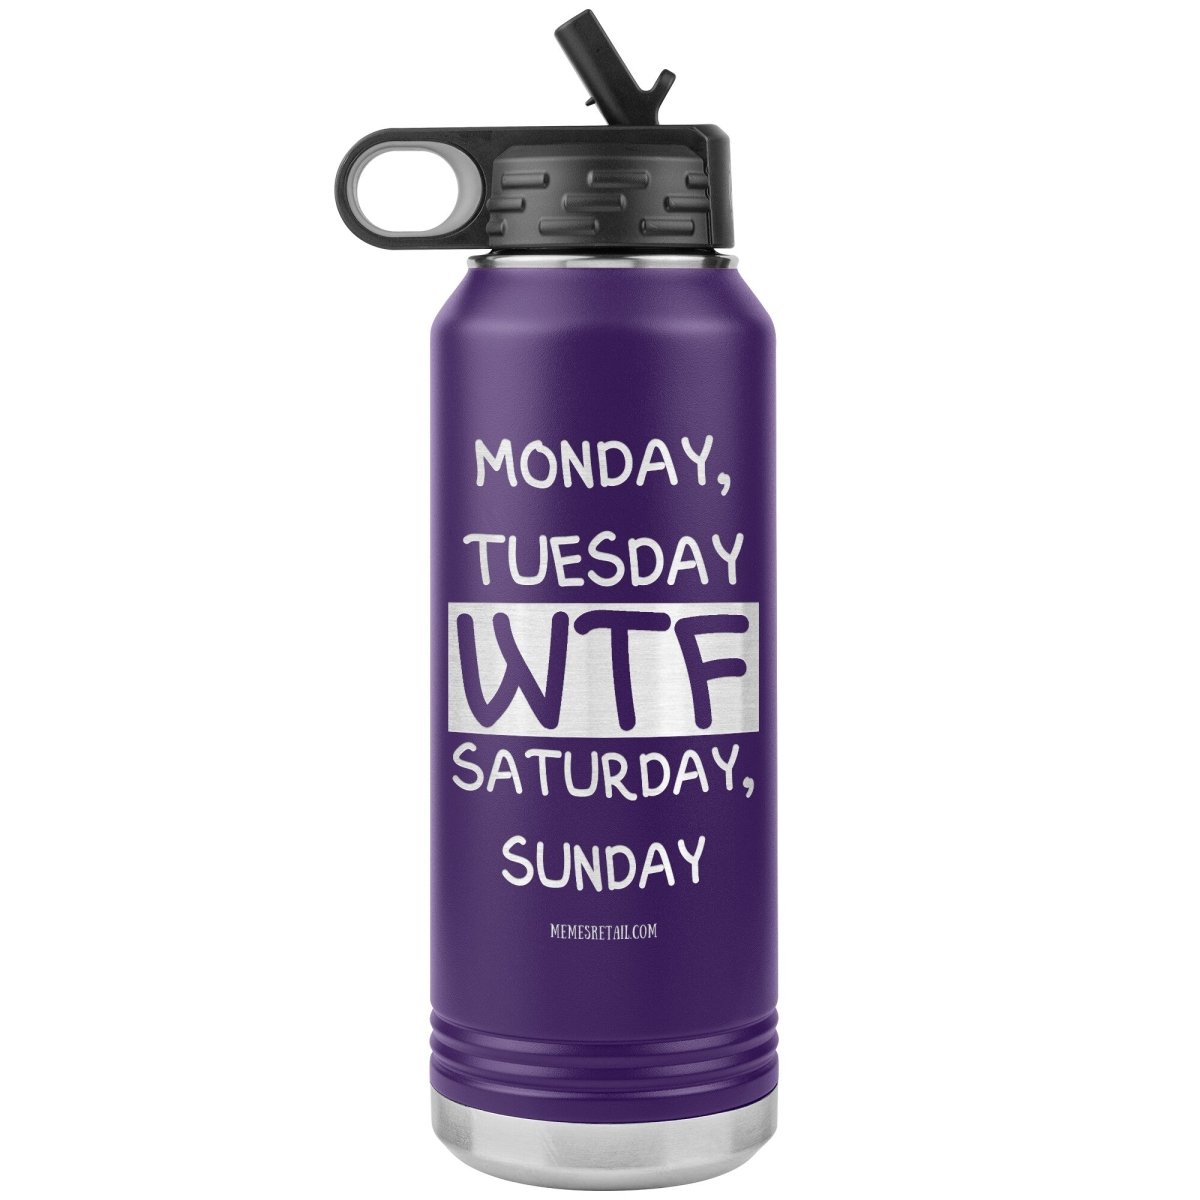 Monday, Tuesday, WTF, Saturday, Sunday 32 oz Water Tumbler, Purple - MemesRetail.com